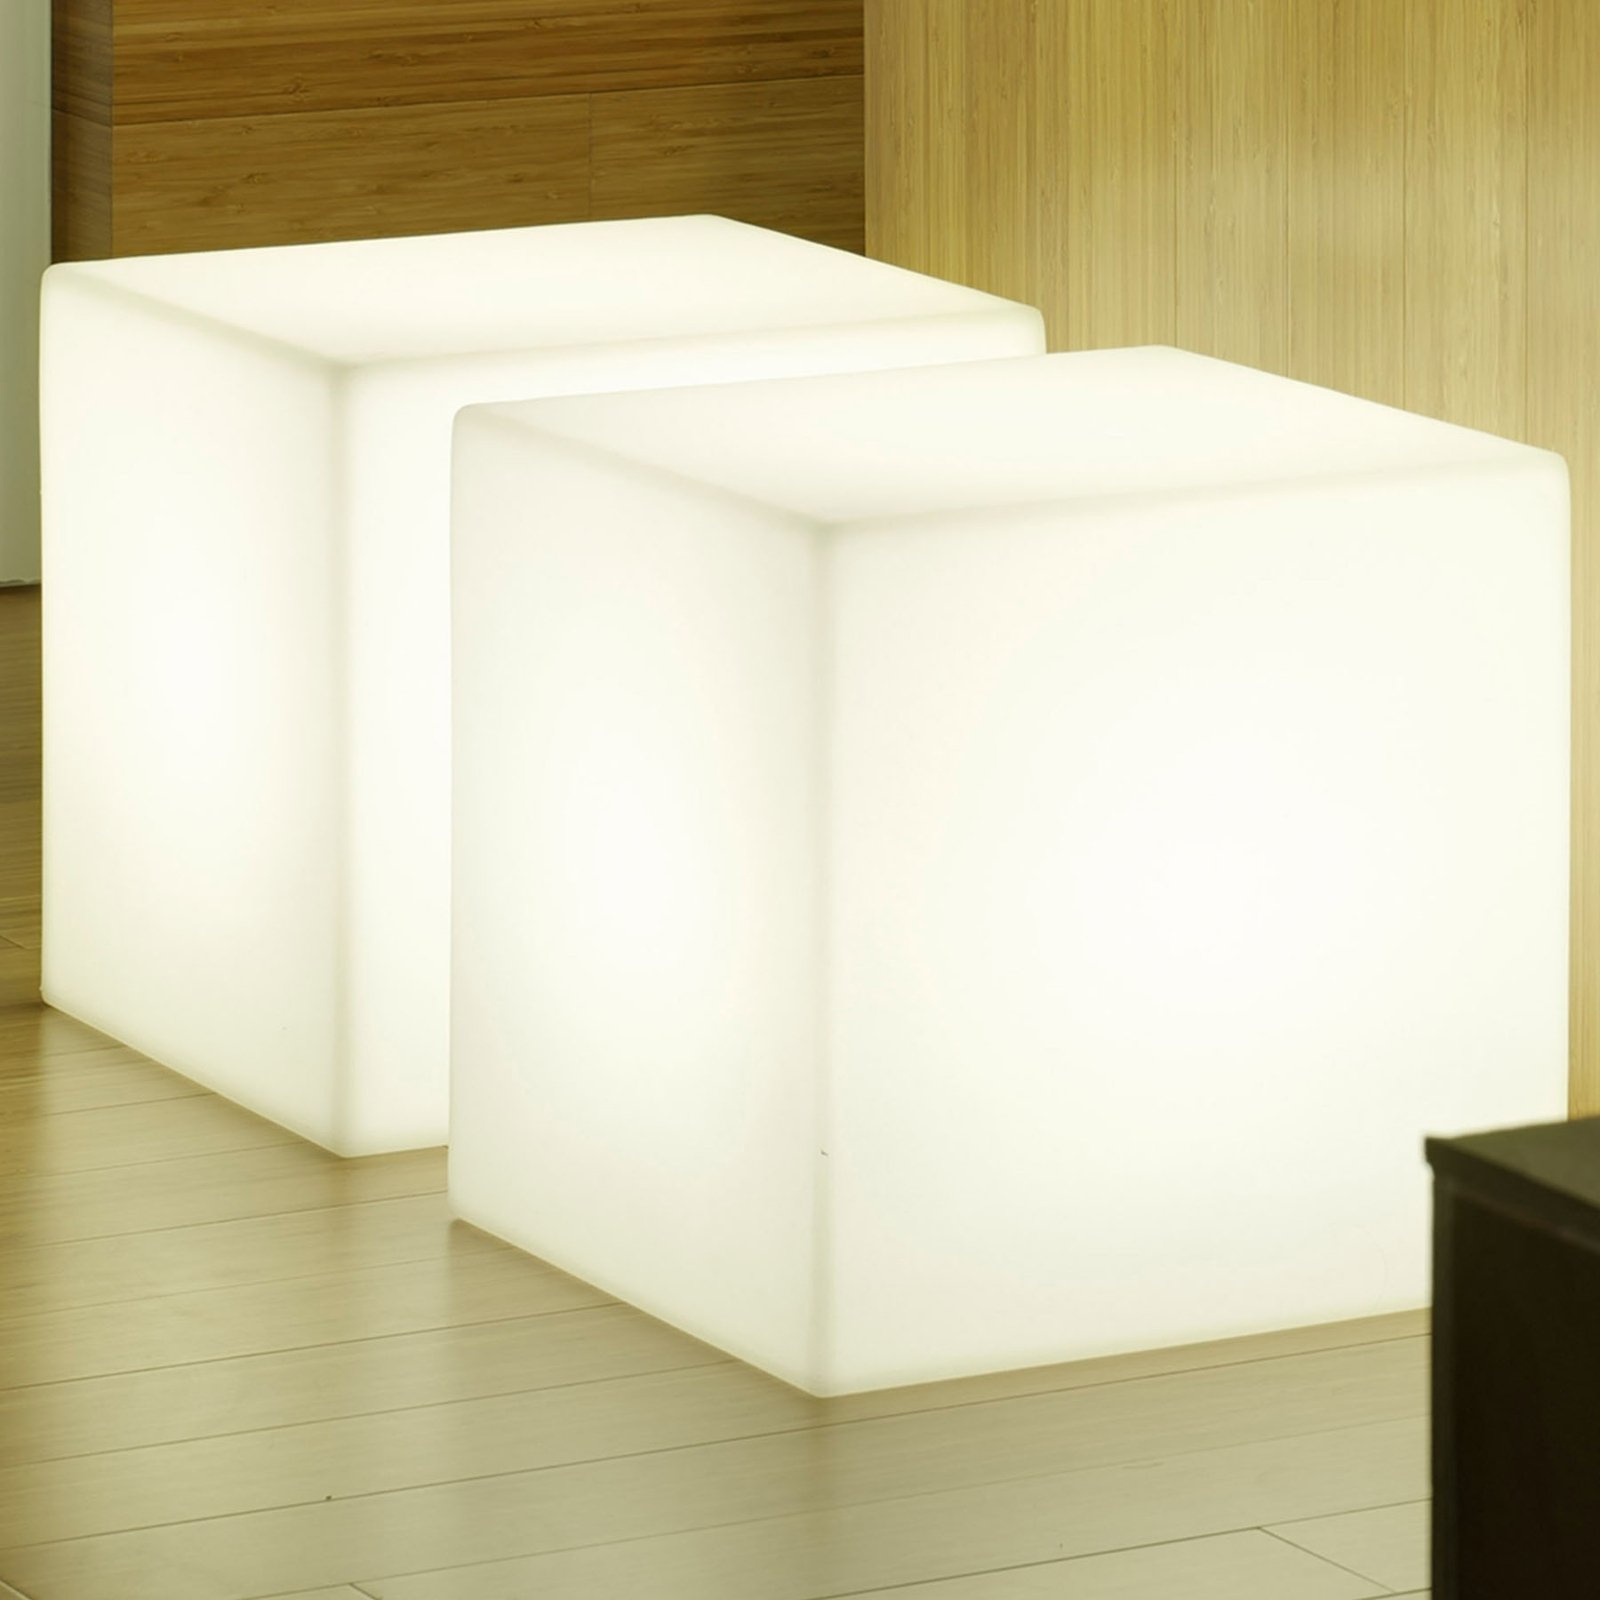 Cuby cubo luminoso decorativo altura 32cm